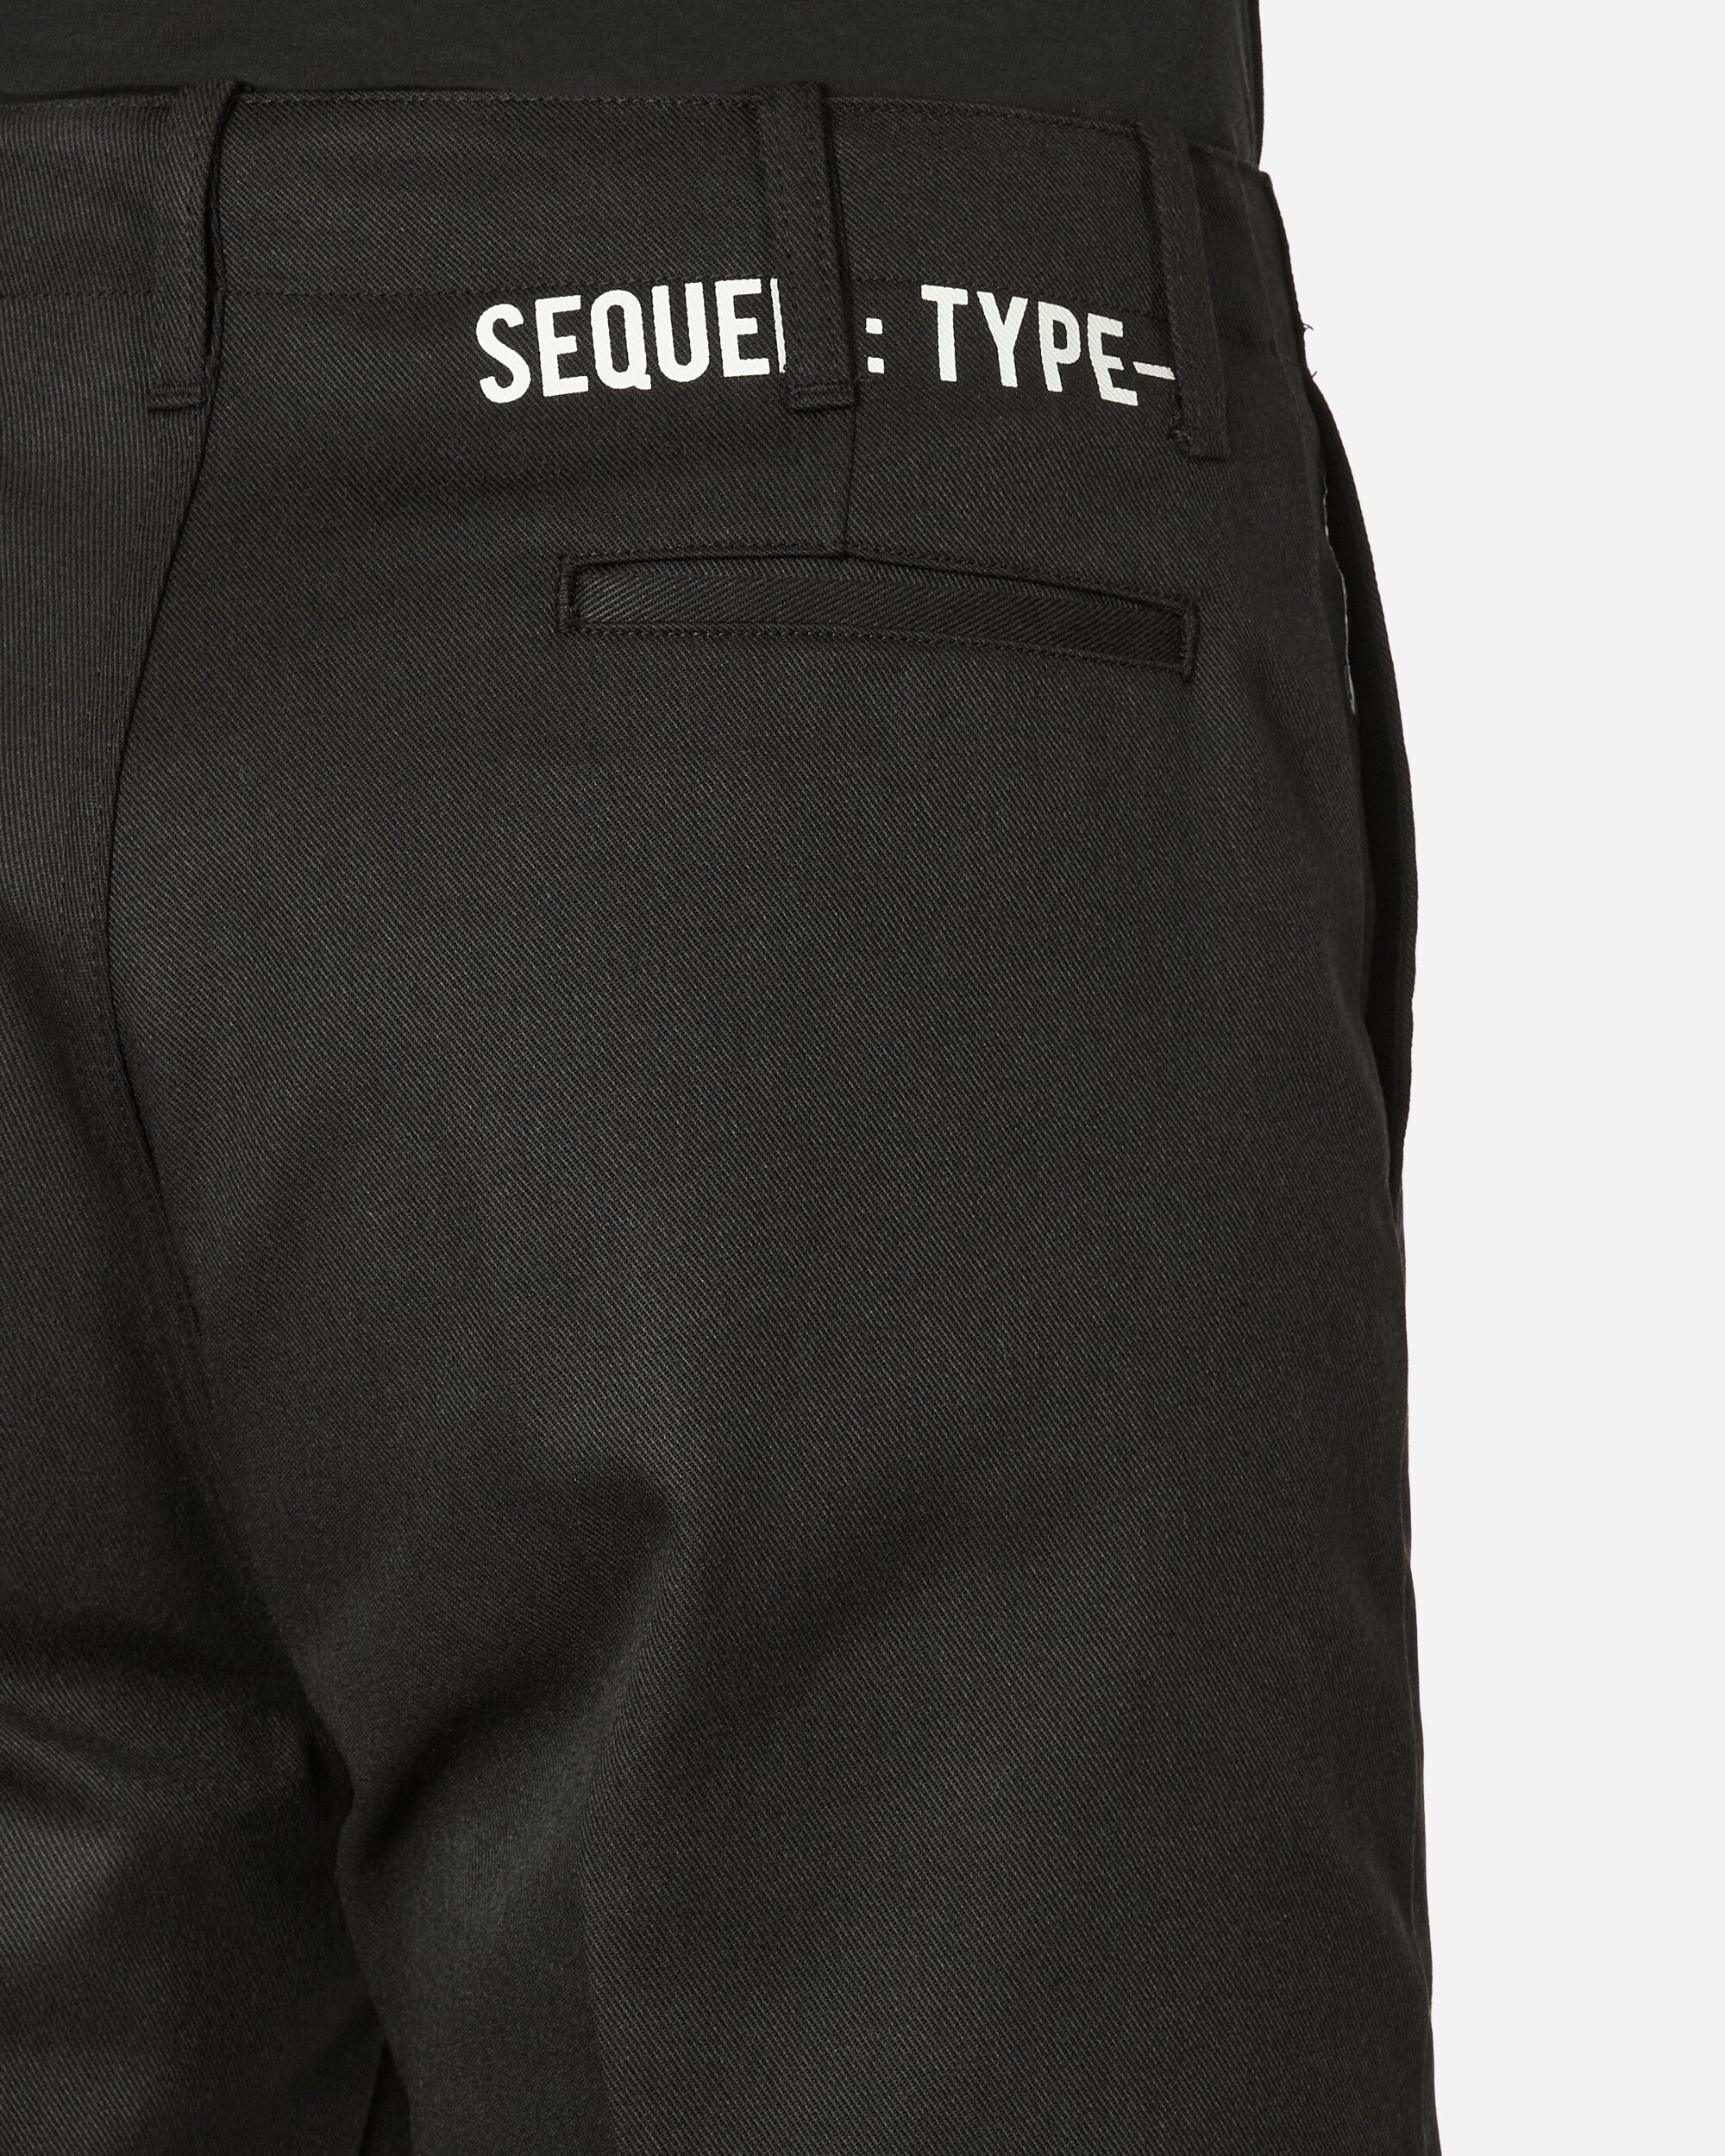 Sequel Chino Short Pants (Type-5) Black Shorts Short SQ-23SS-SP-01 1